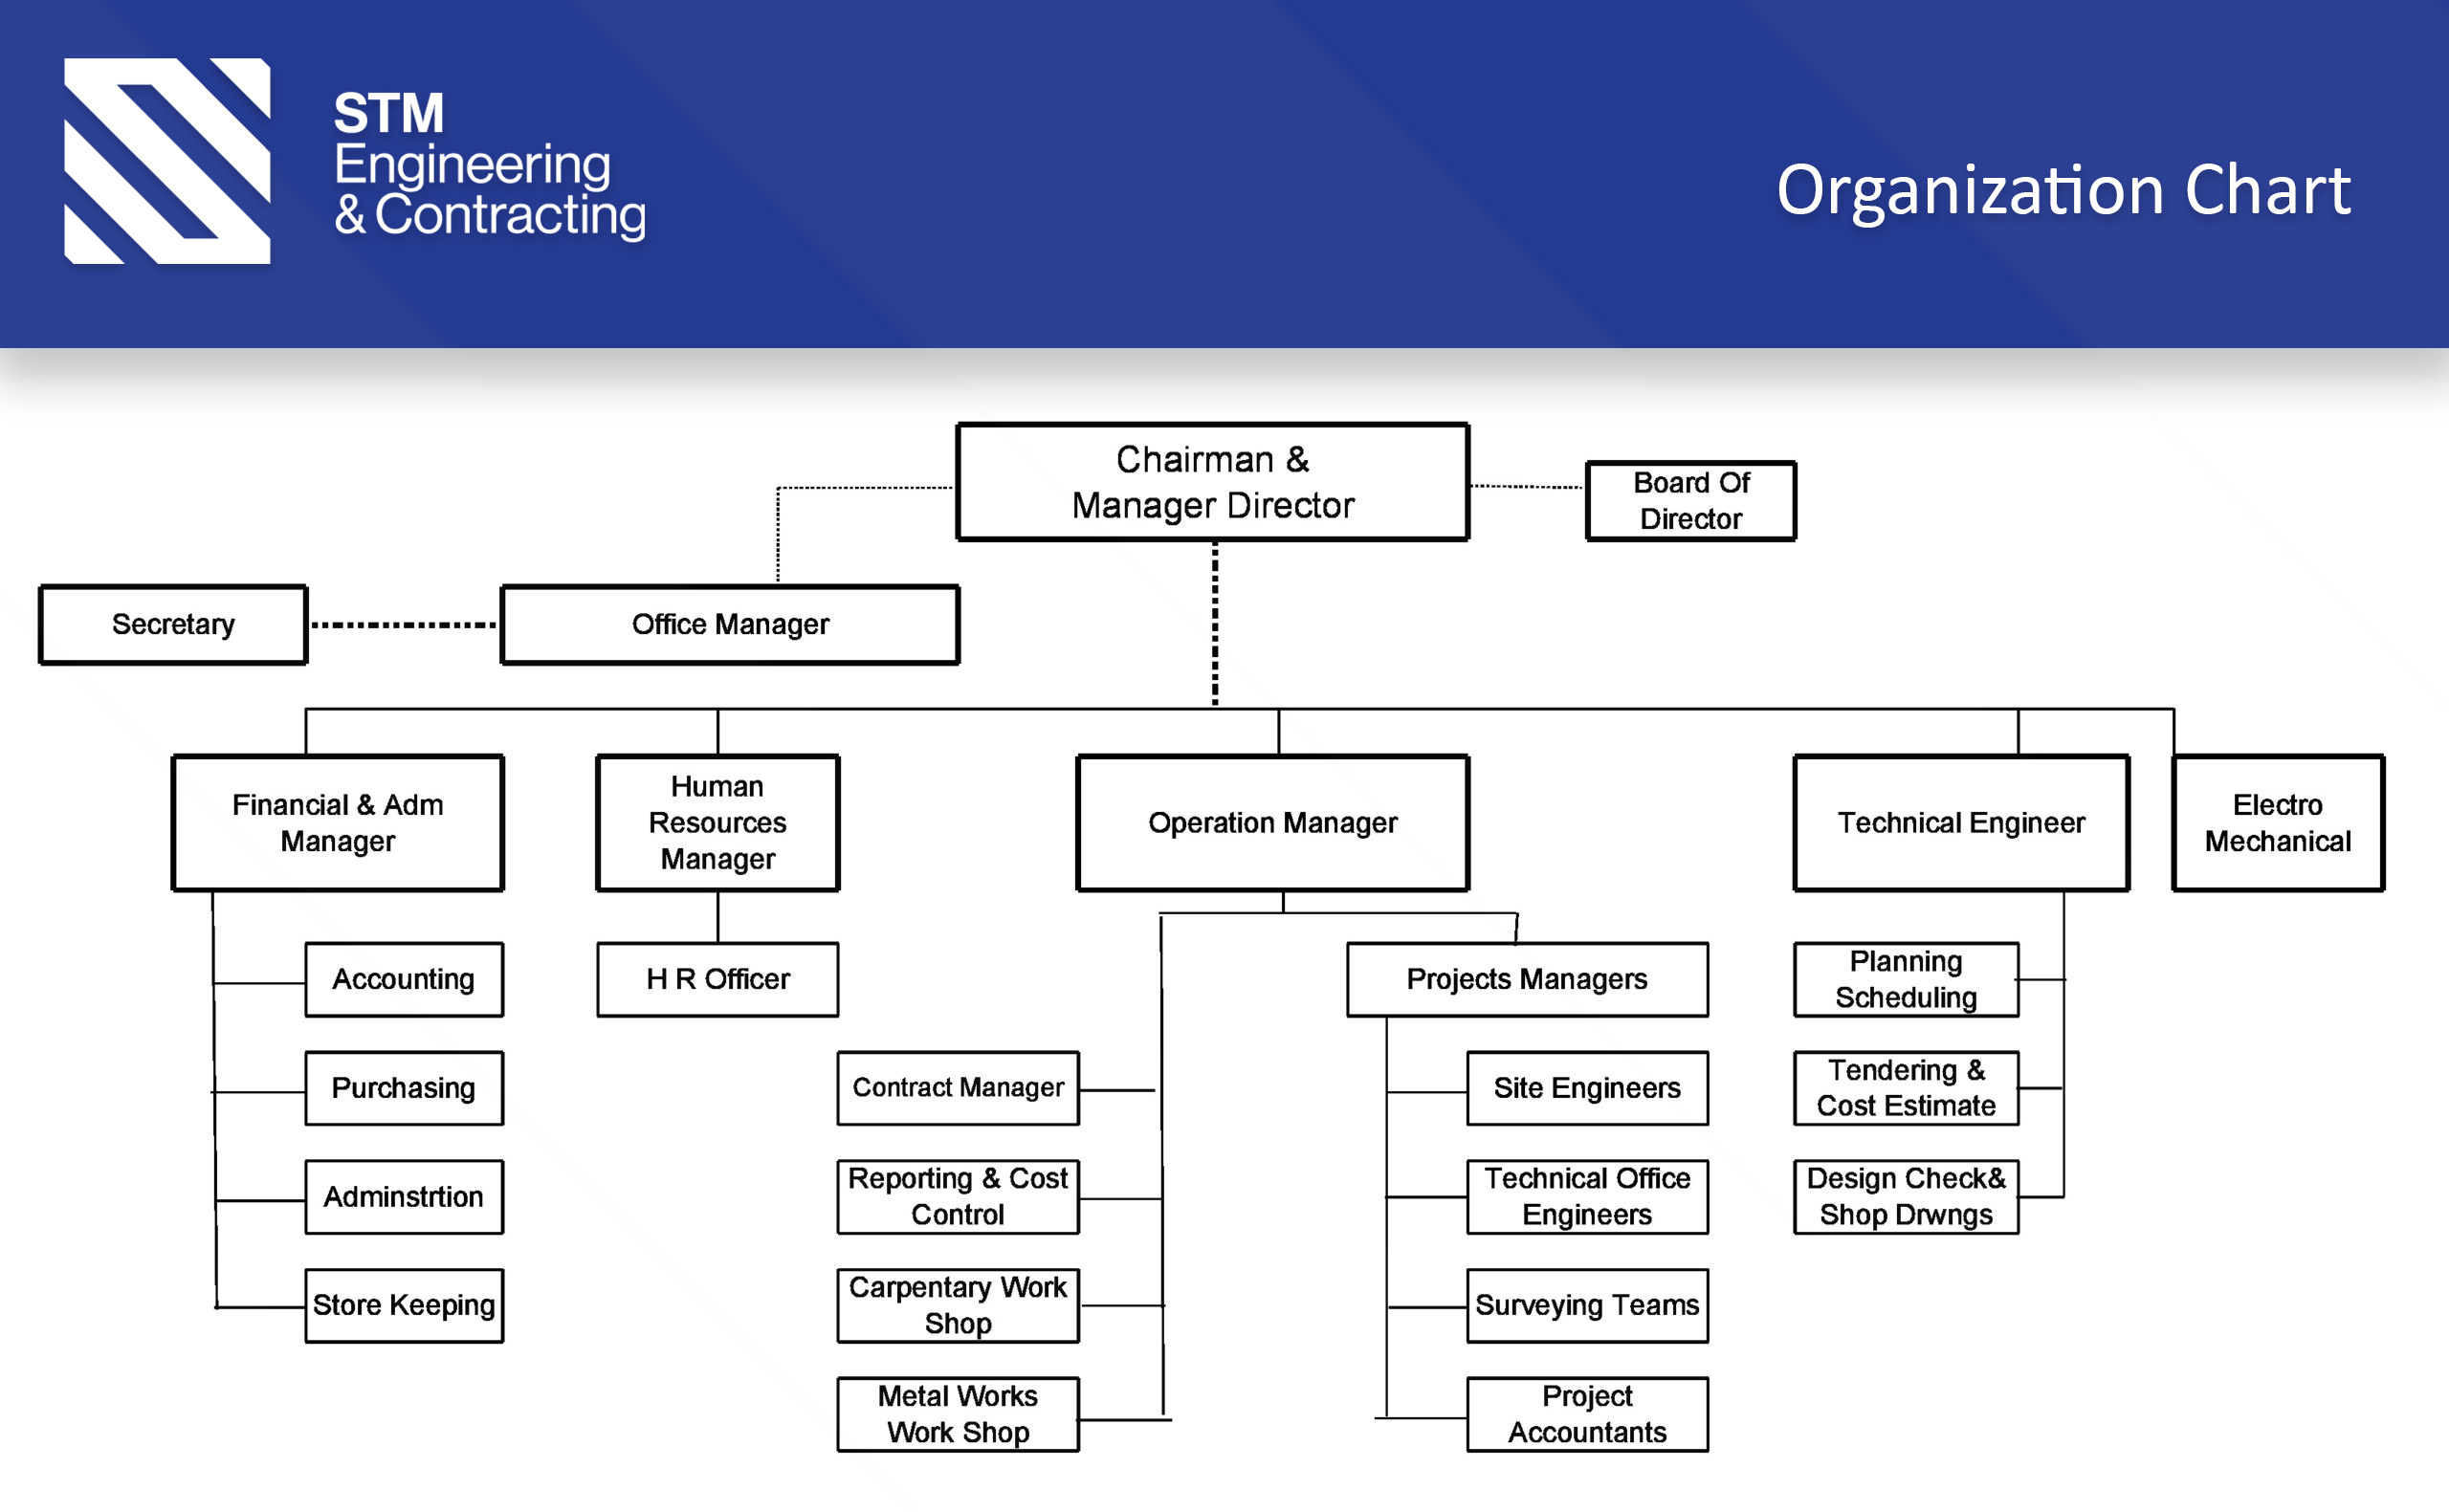 Aecom Organizational Chart